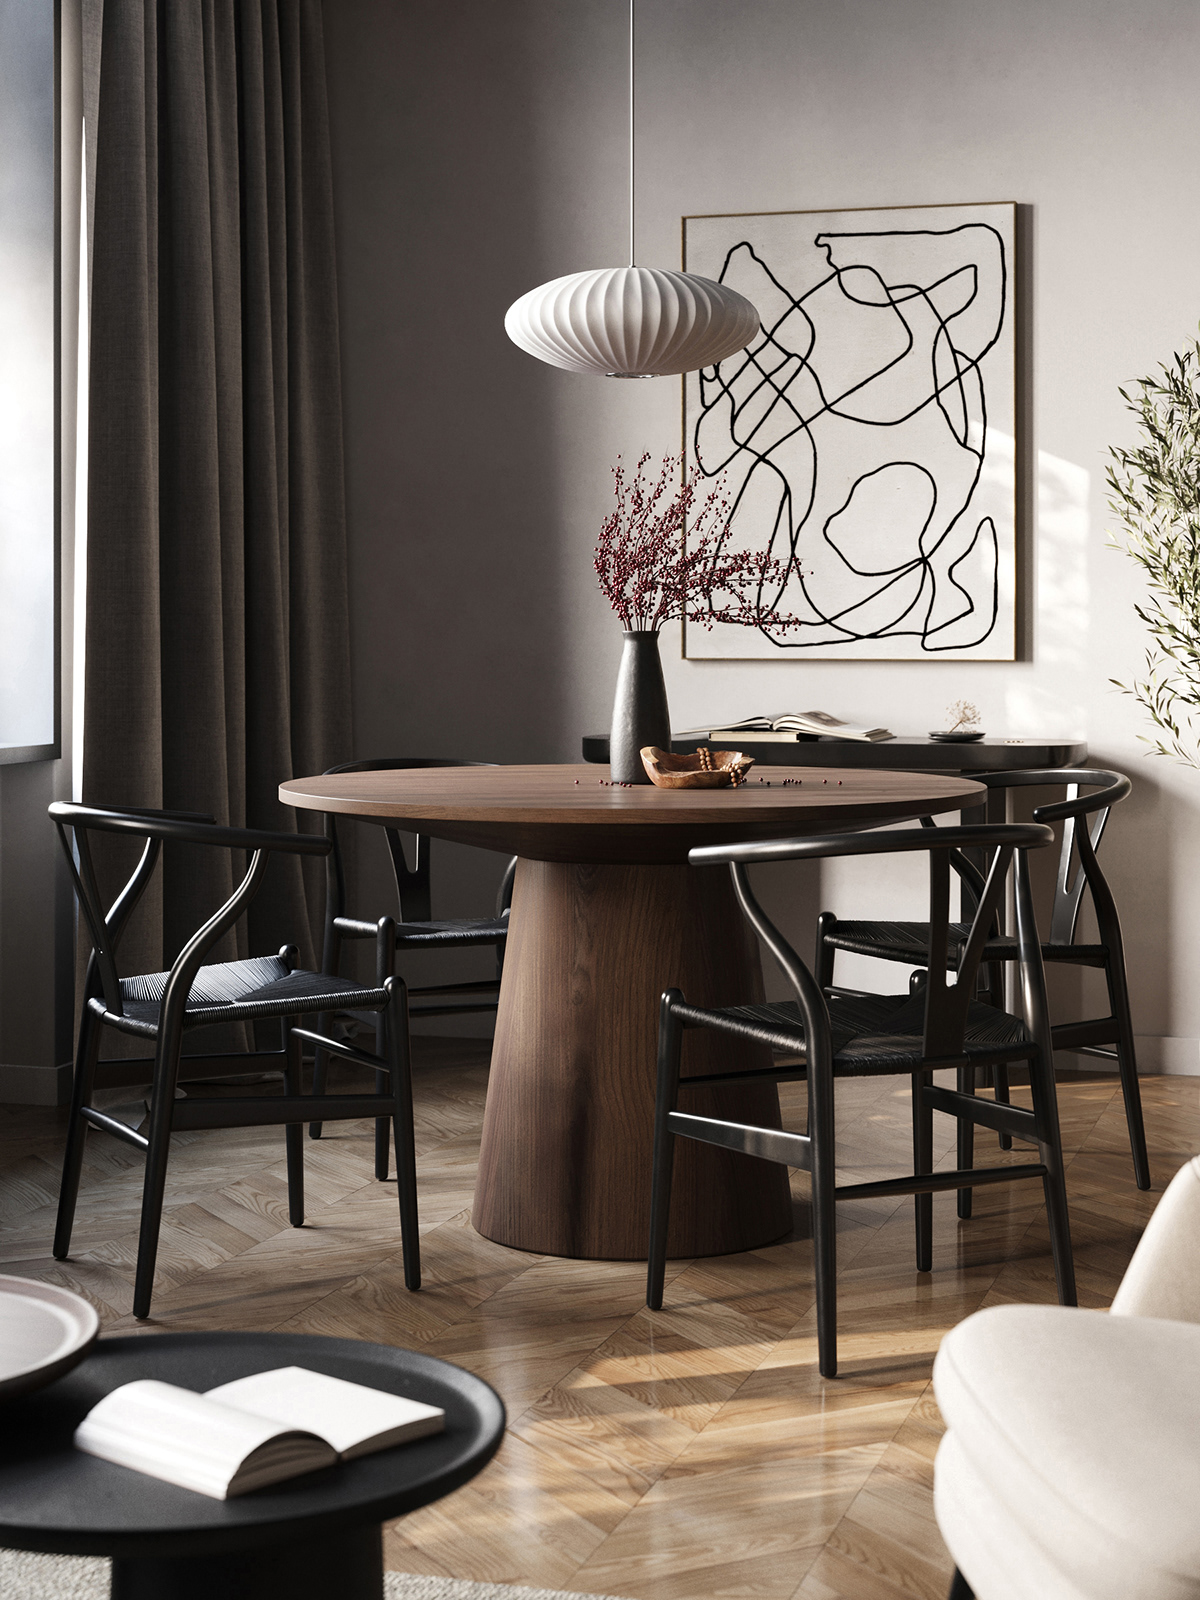 autumn decor kitchen living room wood CGI furniture interior design  Render visualization